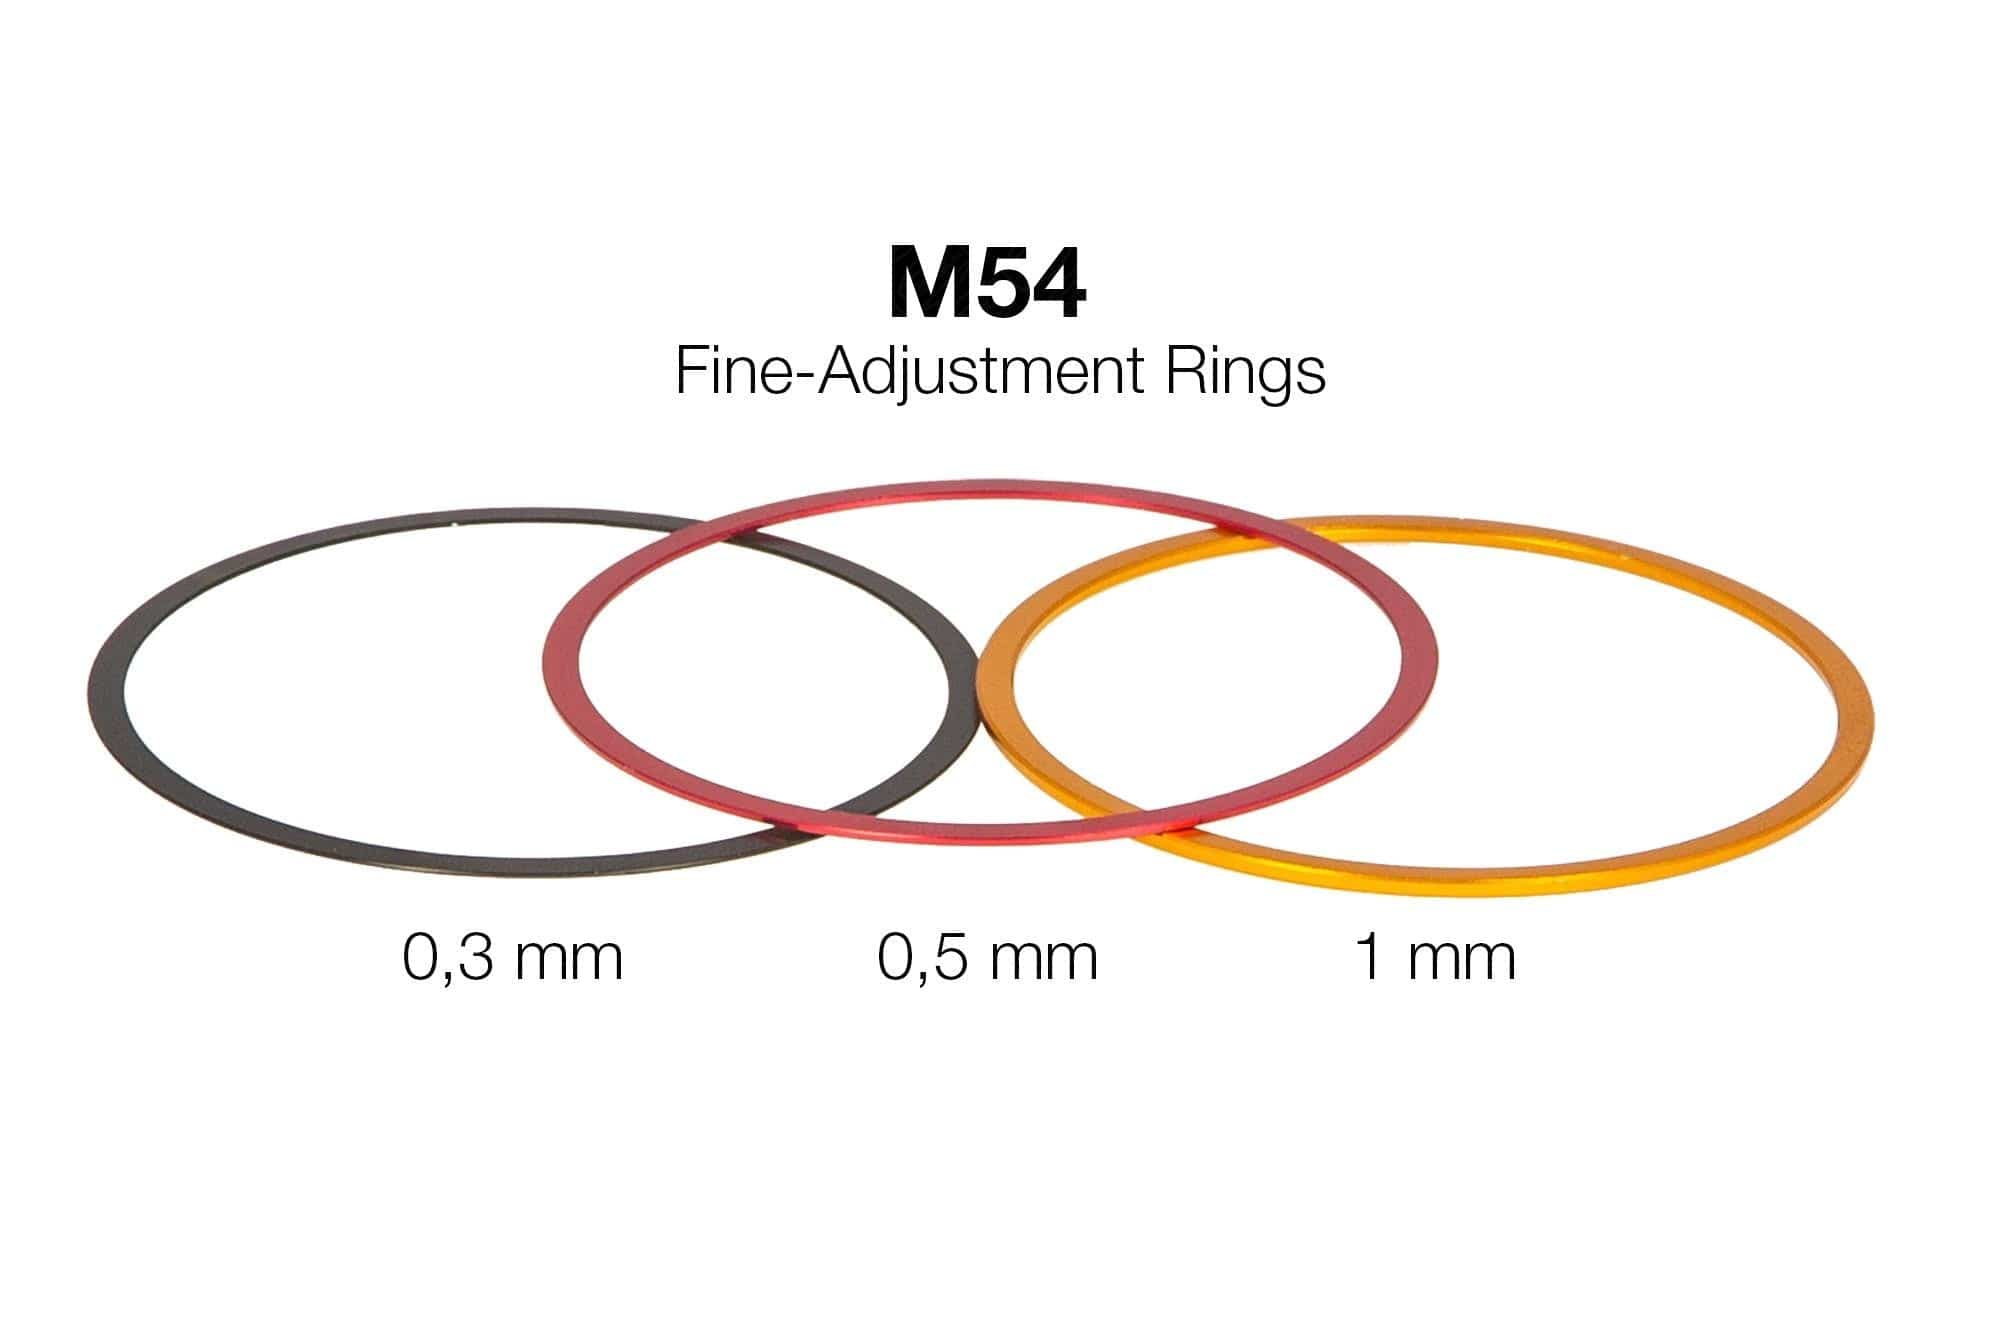 Baader Planetarium Accessory Baader M54 Fine-Adjustment rings Set (0,3 / 0,5 / 1 mm) - Aluminum - 2457920